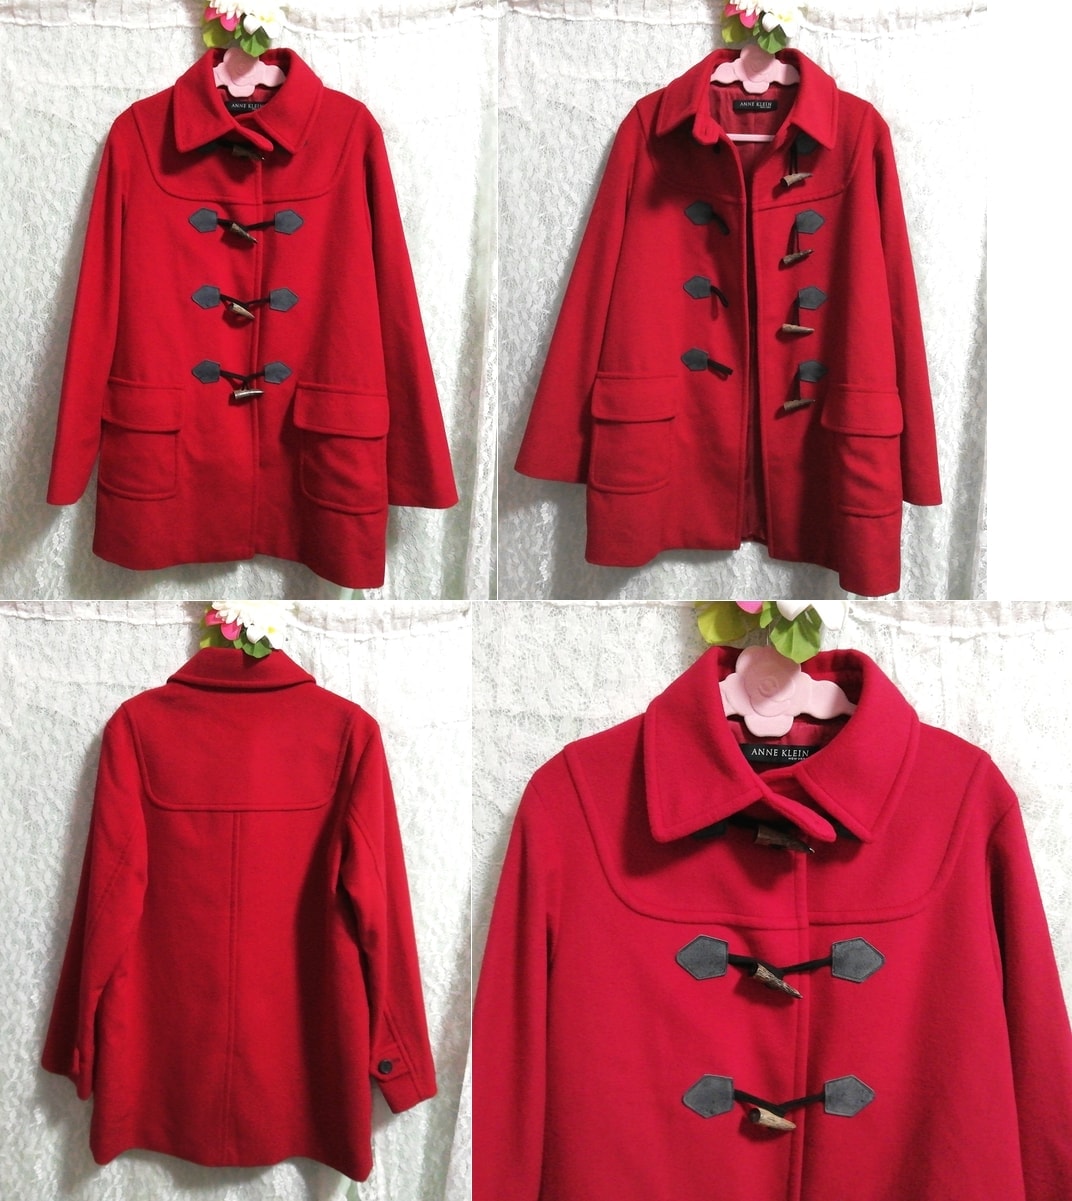 Anne klein new york red angora wool duffel coat overcoat, coat, coat in general, m size